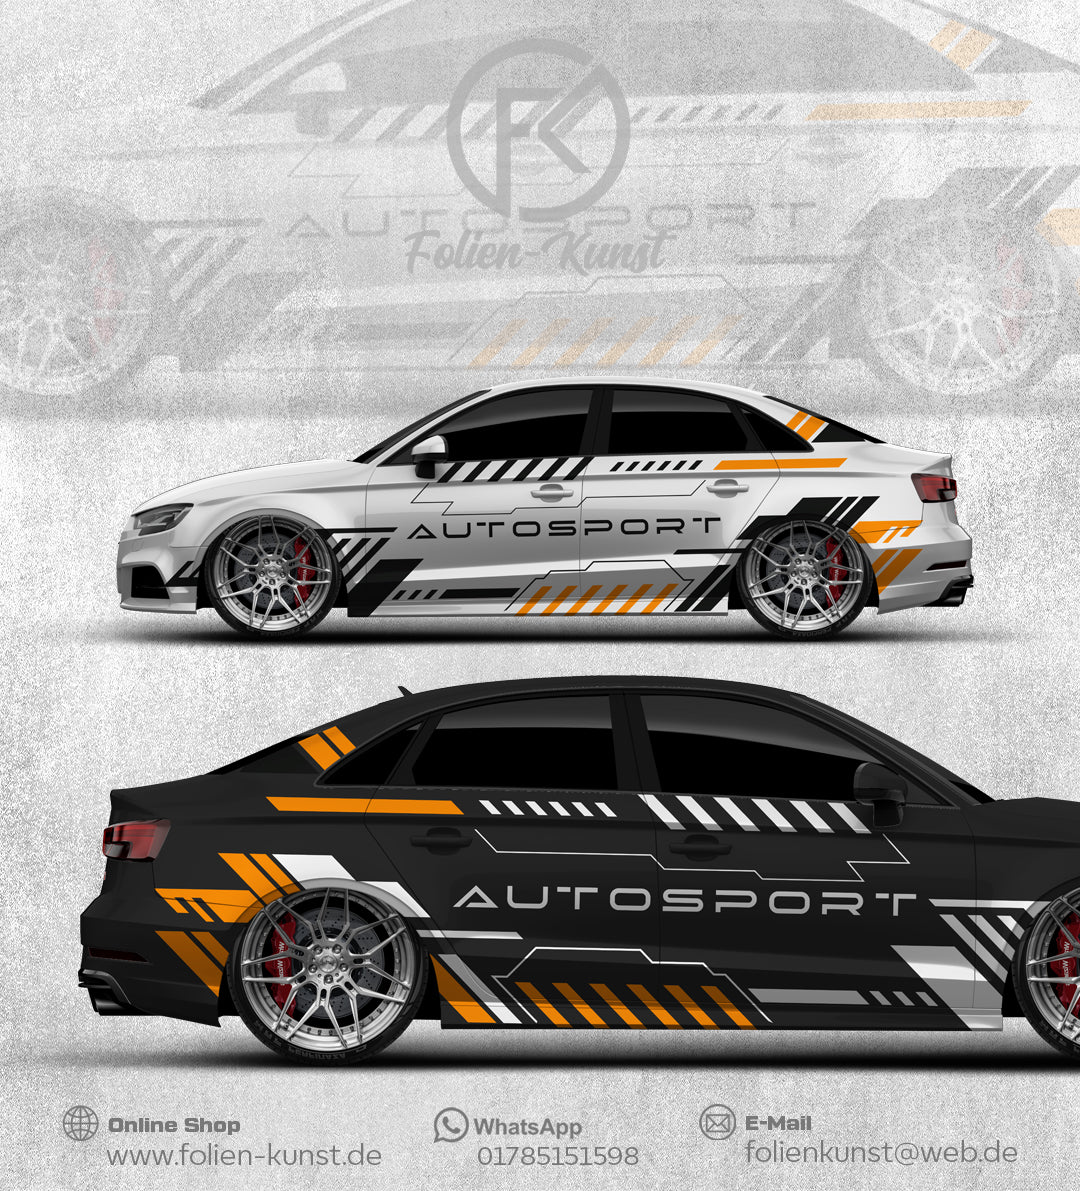 Autosport Folien Tuning Motorsport Design Aufkleber Set #310